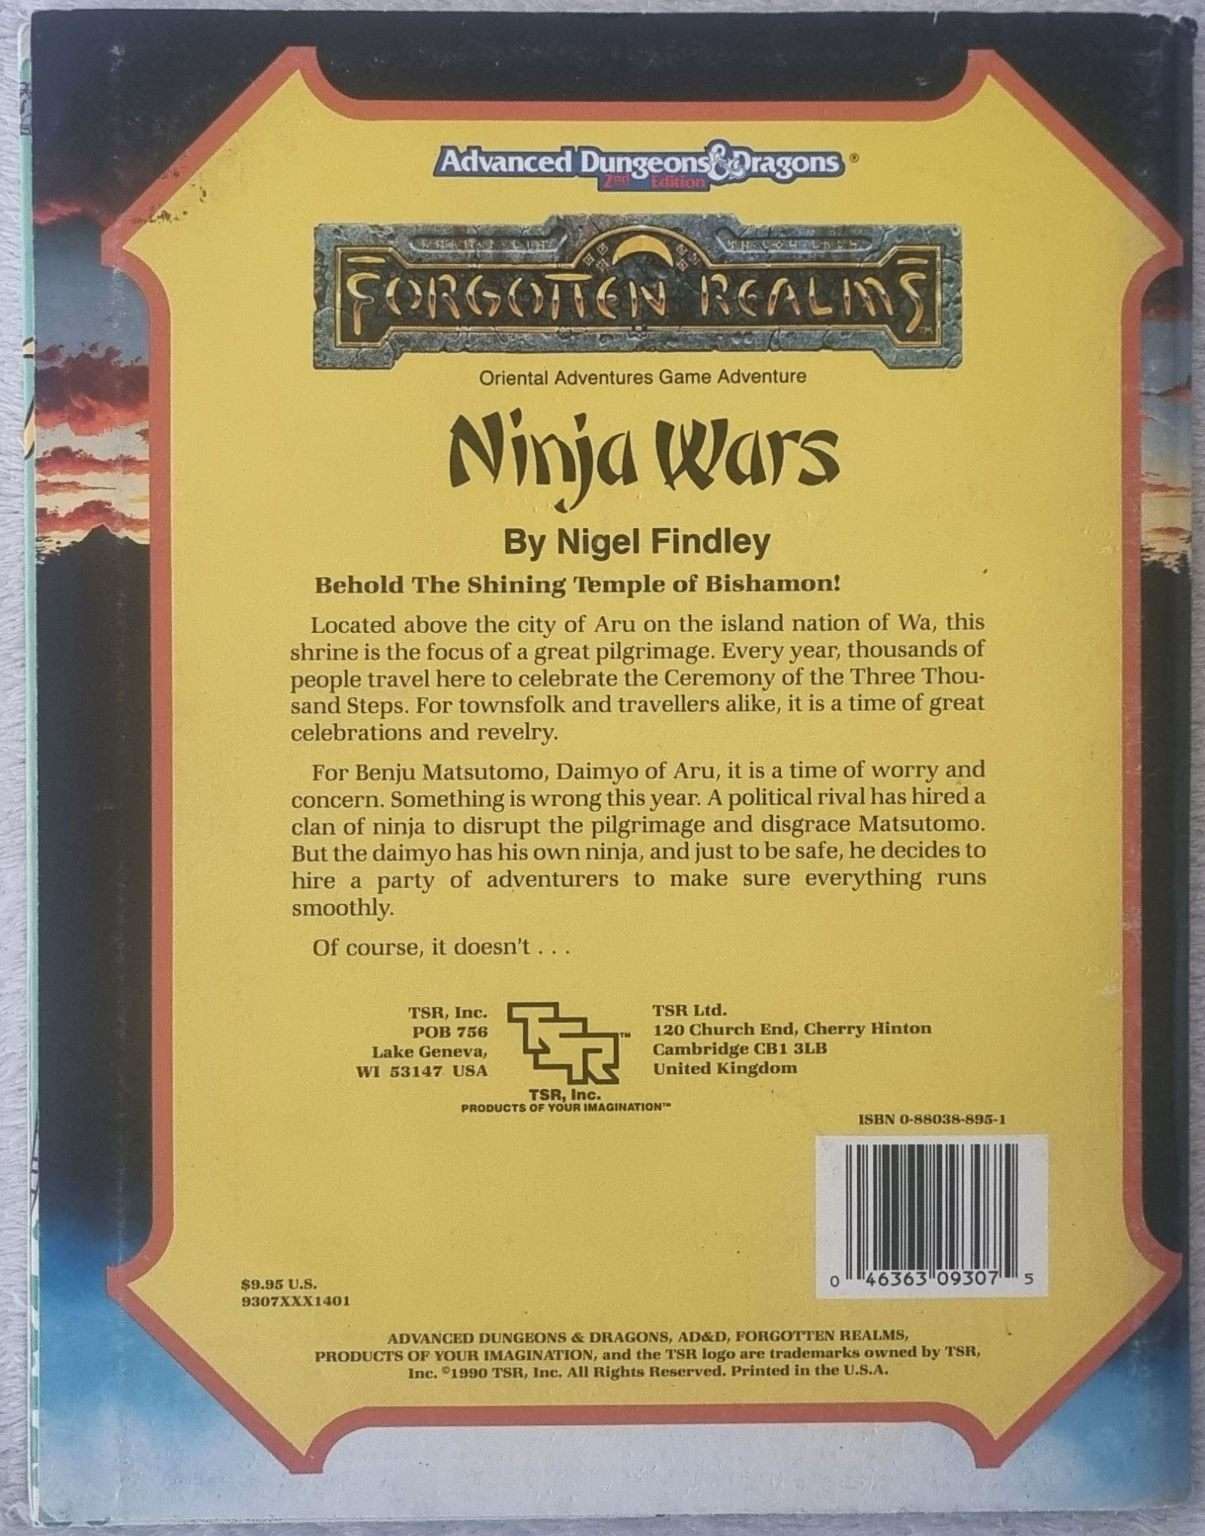 AD&D - Forgotten Realms - Ninja Wars (FROA1 9307) Default Title